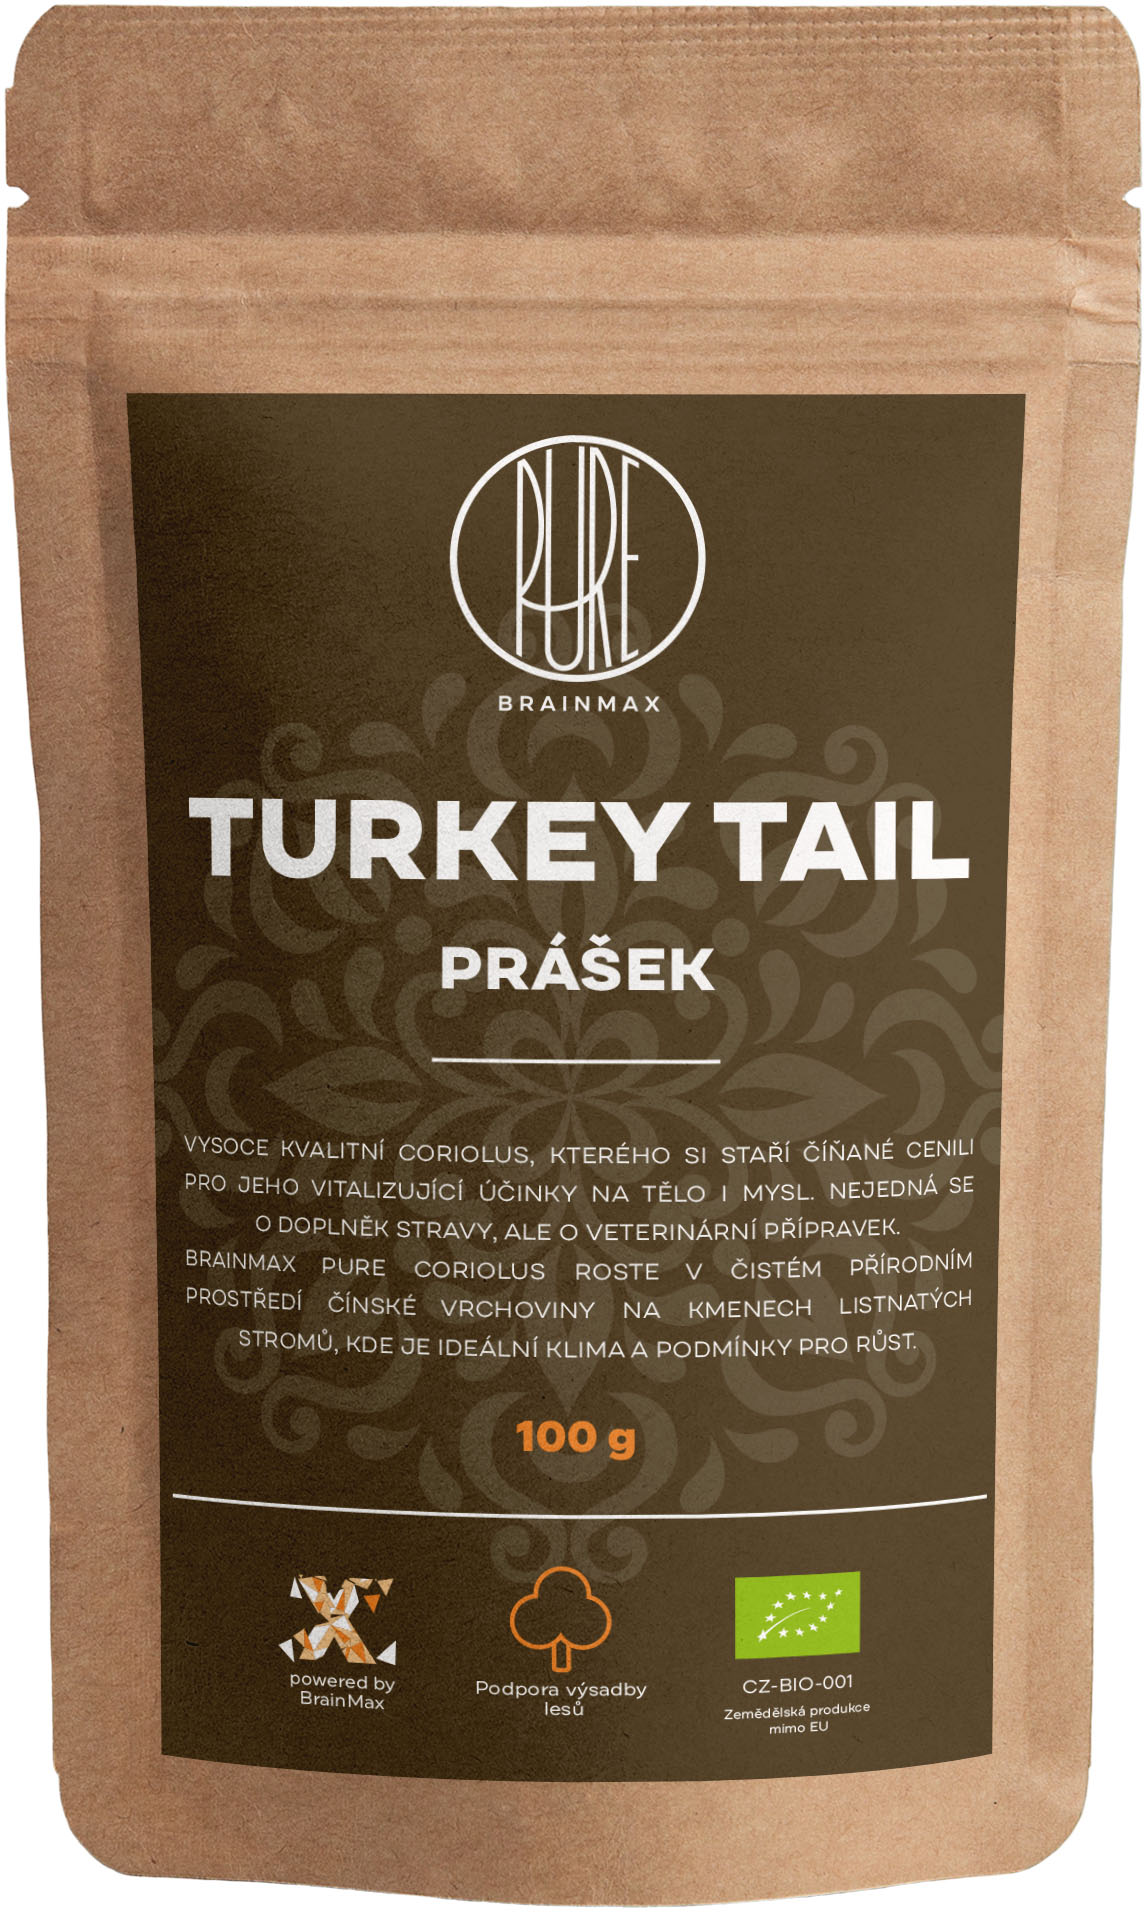 Levně BrainMax Pure Turkey Tail (Coriolus) prášek, BIO, 100g *CZ-BIO-001 certifikát